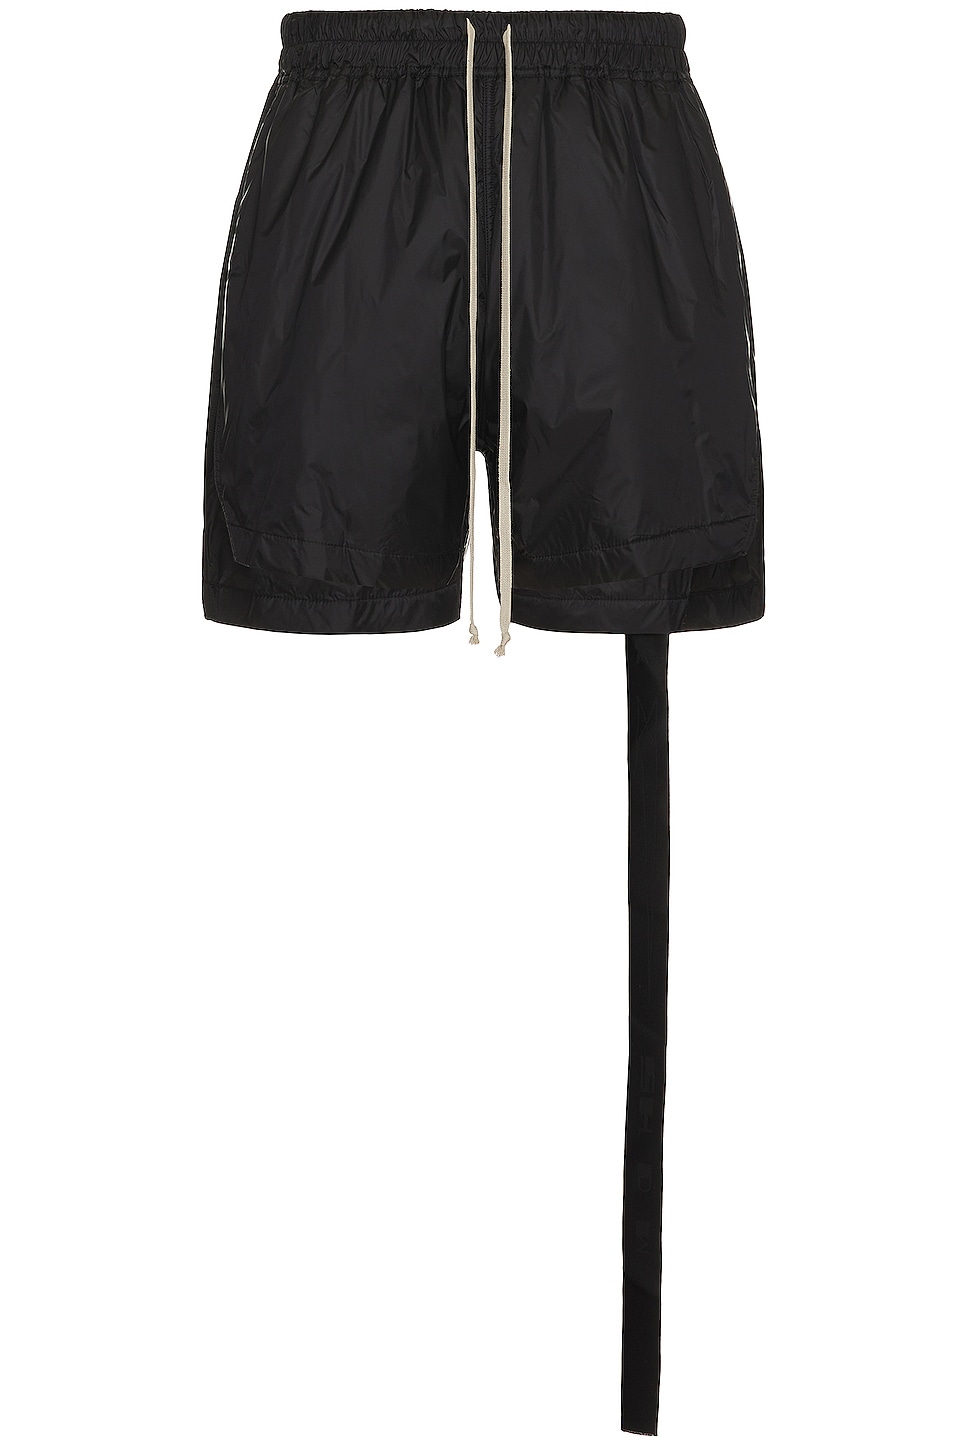 Phleg Boxer Shorts in Black